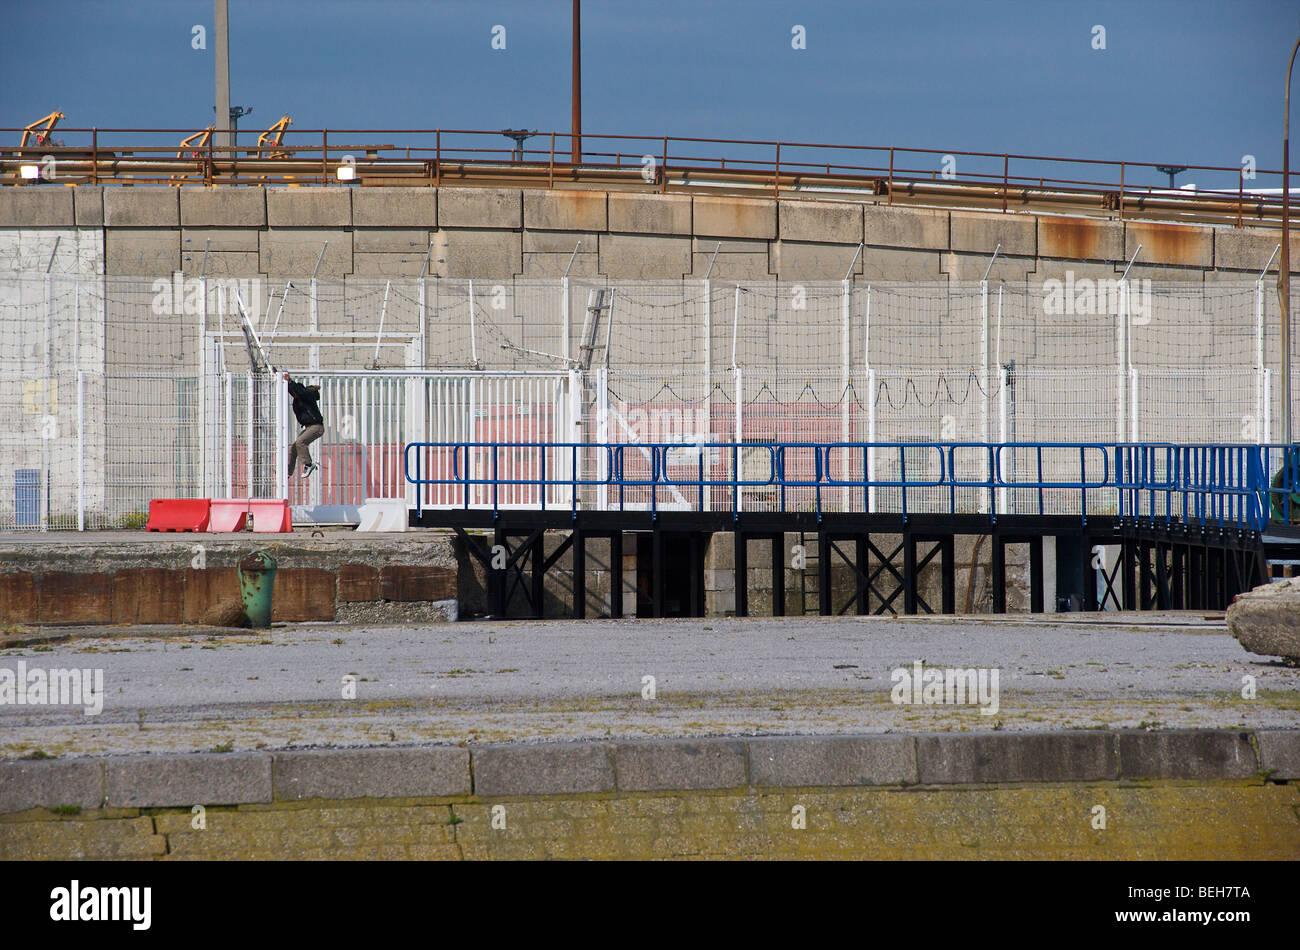 Calais, a refugee hoping to reach the UK by climbing onto a ship Stock Photo